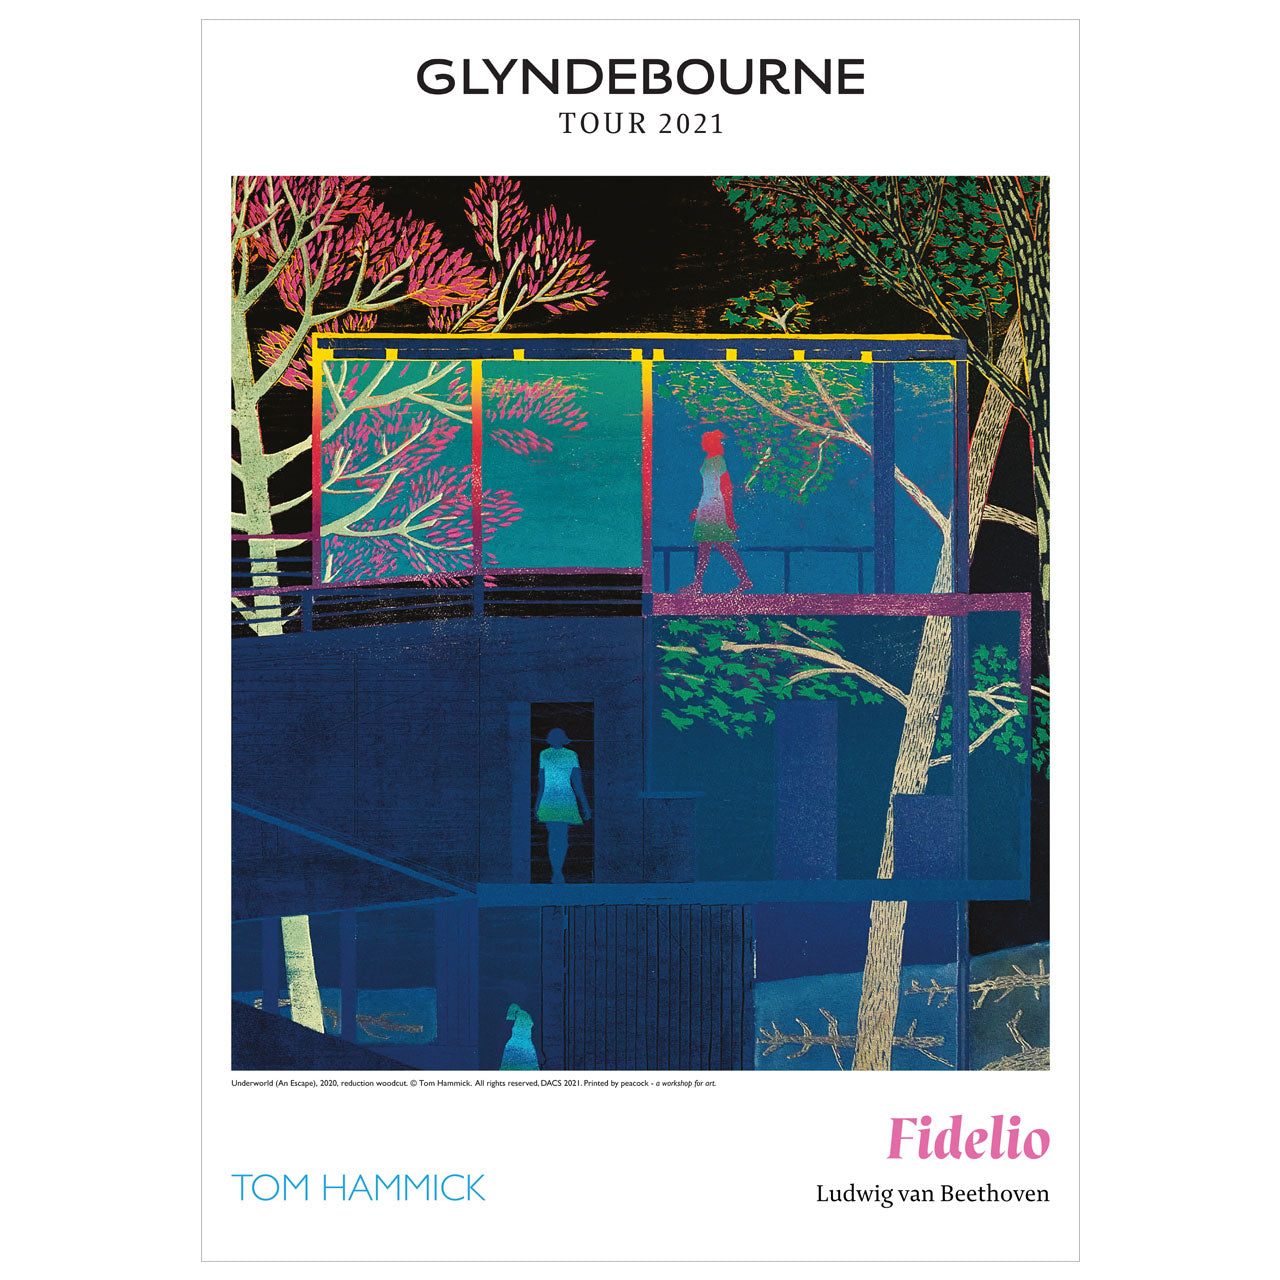 Glyndebourne 'Fidelio' Tour Poster 2021 by Tom Hammick